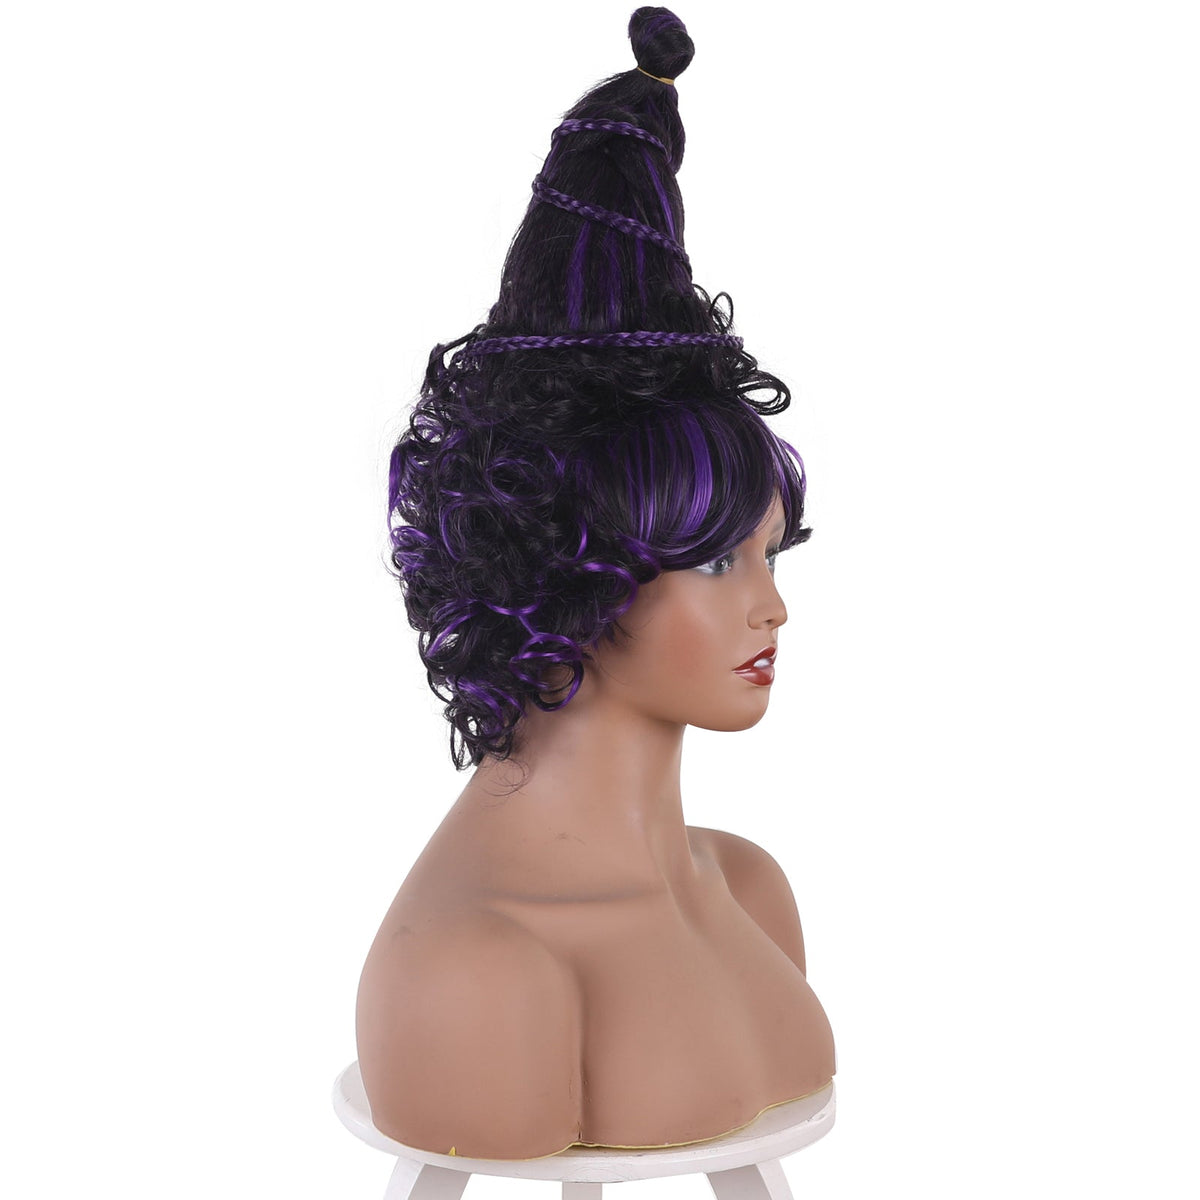 Hocus Pocus 2 Mary Sanderson Purple Short Movie Cosplay Halloween cosplay Wig Special Wig